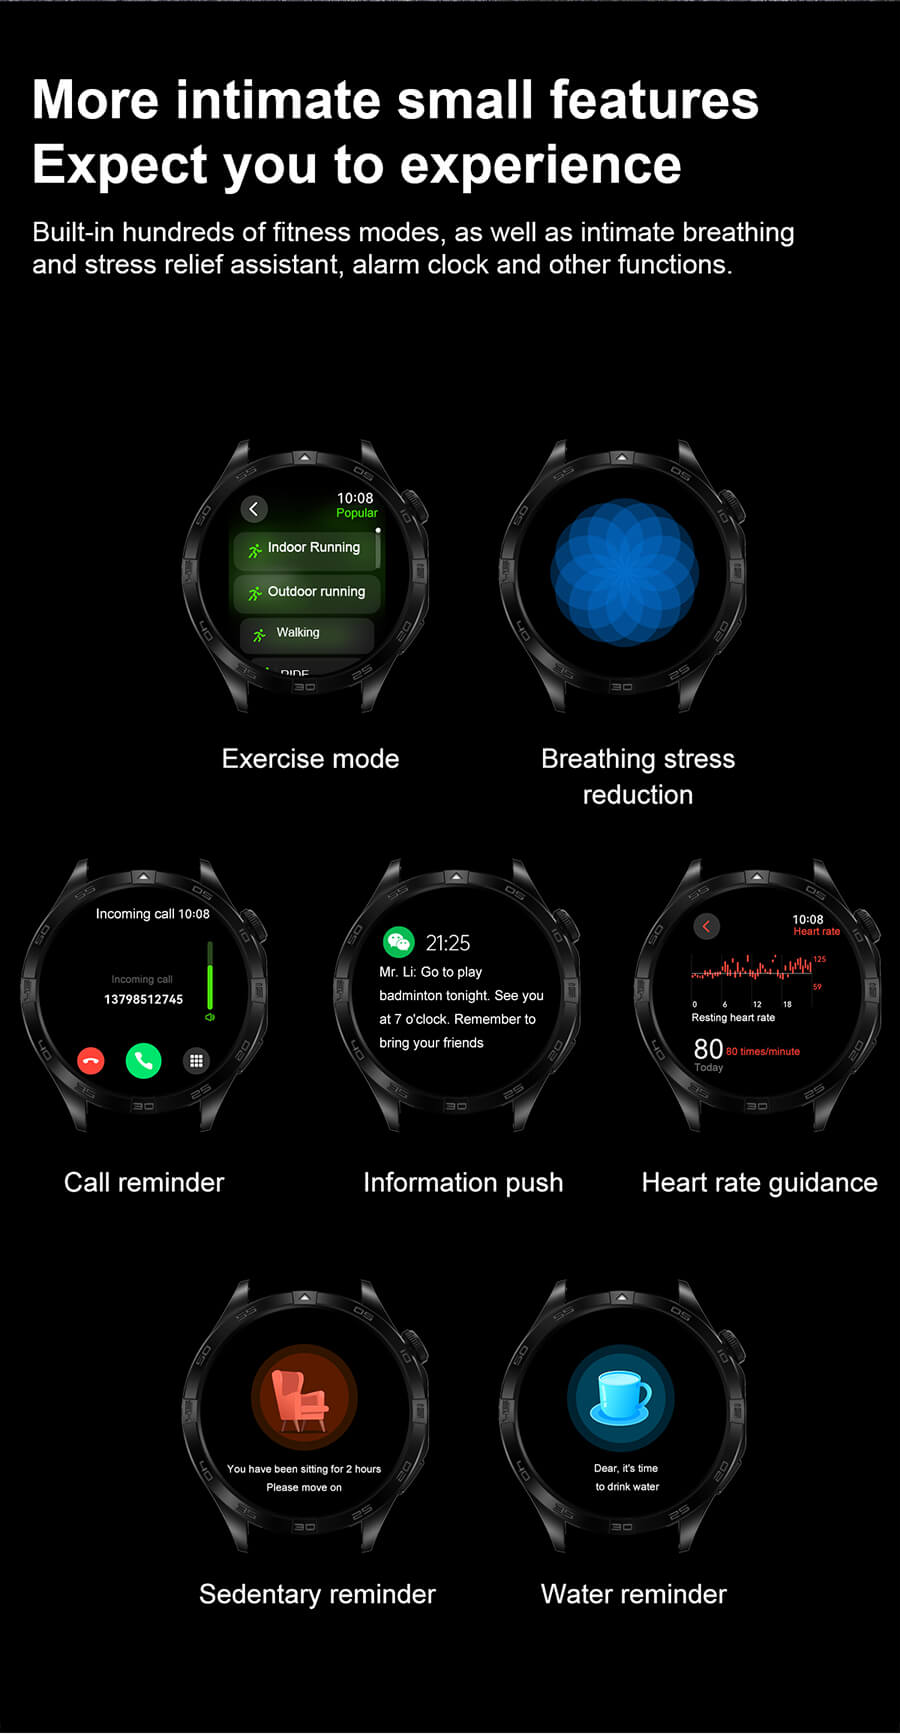 DT5 Mate Smartwatch Healthy Monitoring HD Full Screen Strong Endurance-Shenzhen Shengye Technology Co.,Ltd